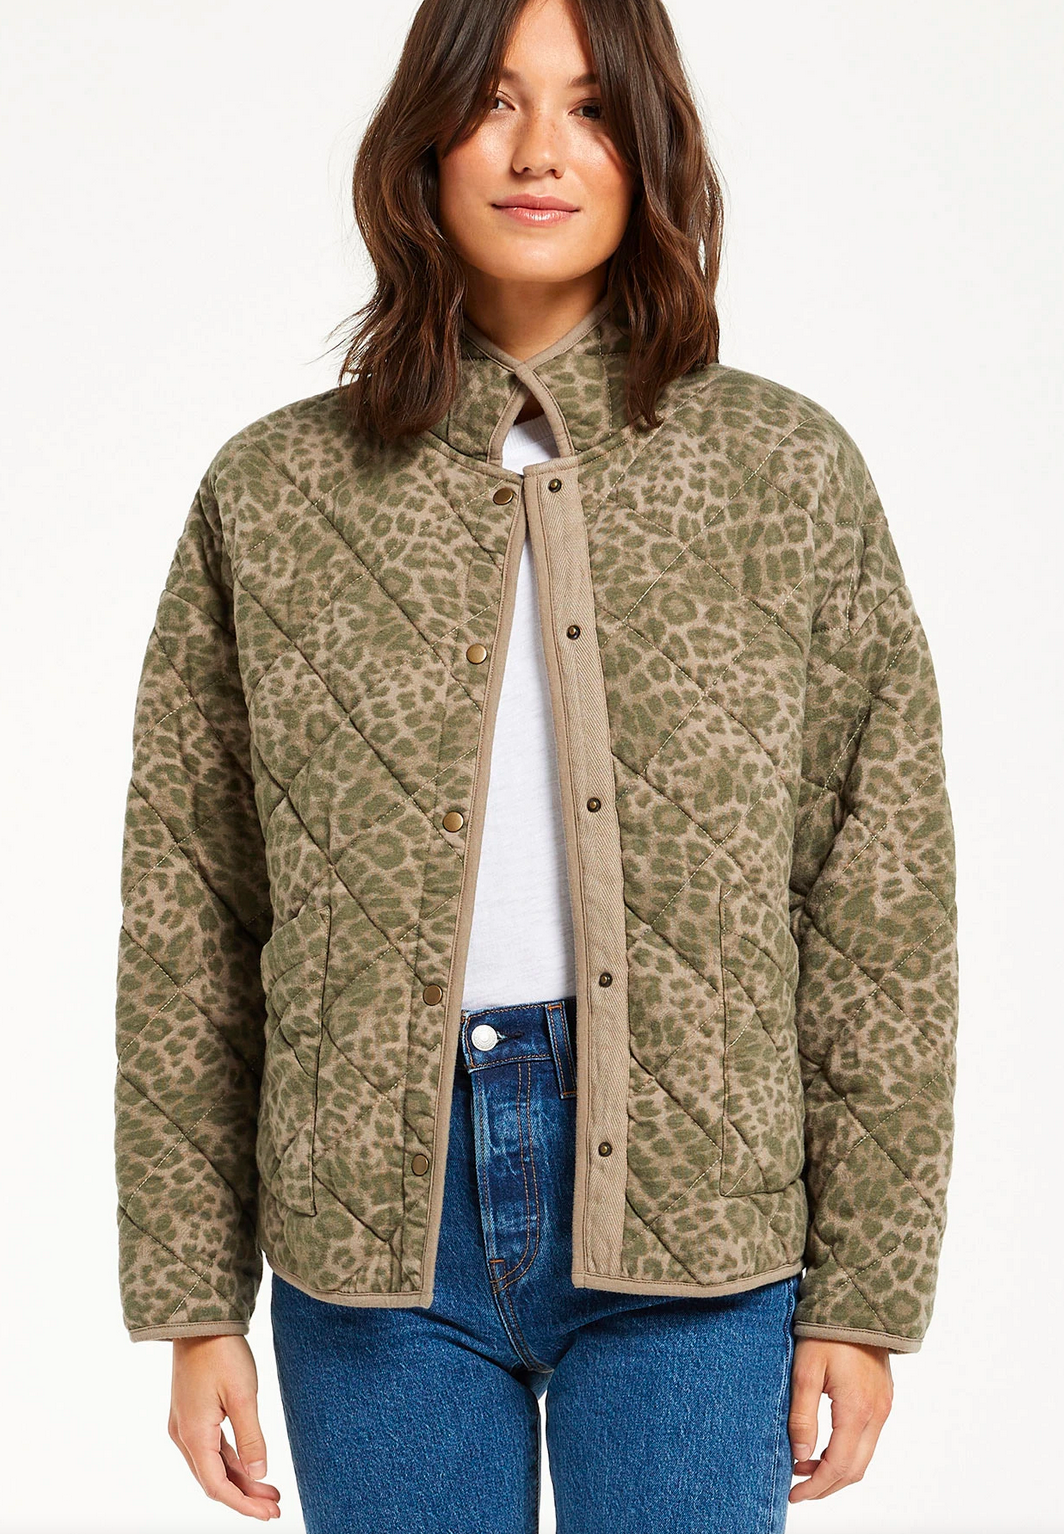 Maya Leopard Jacket